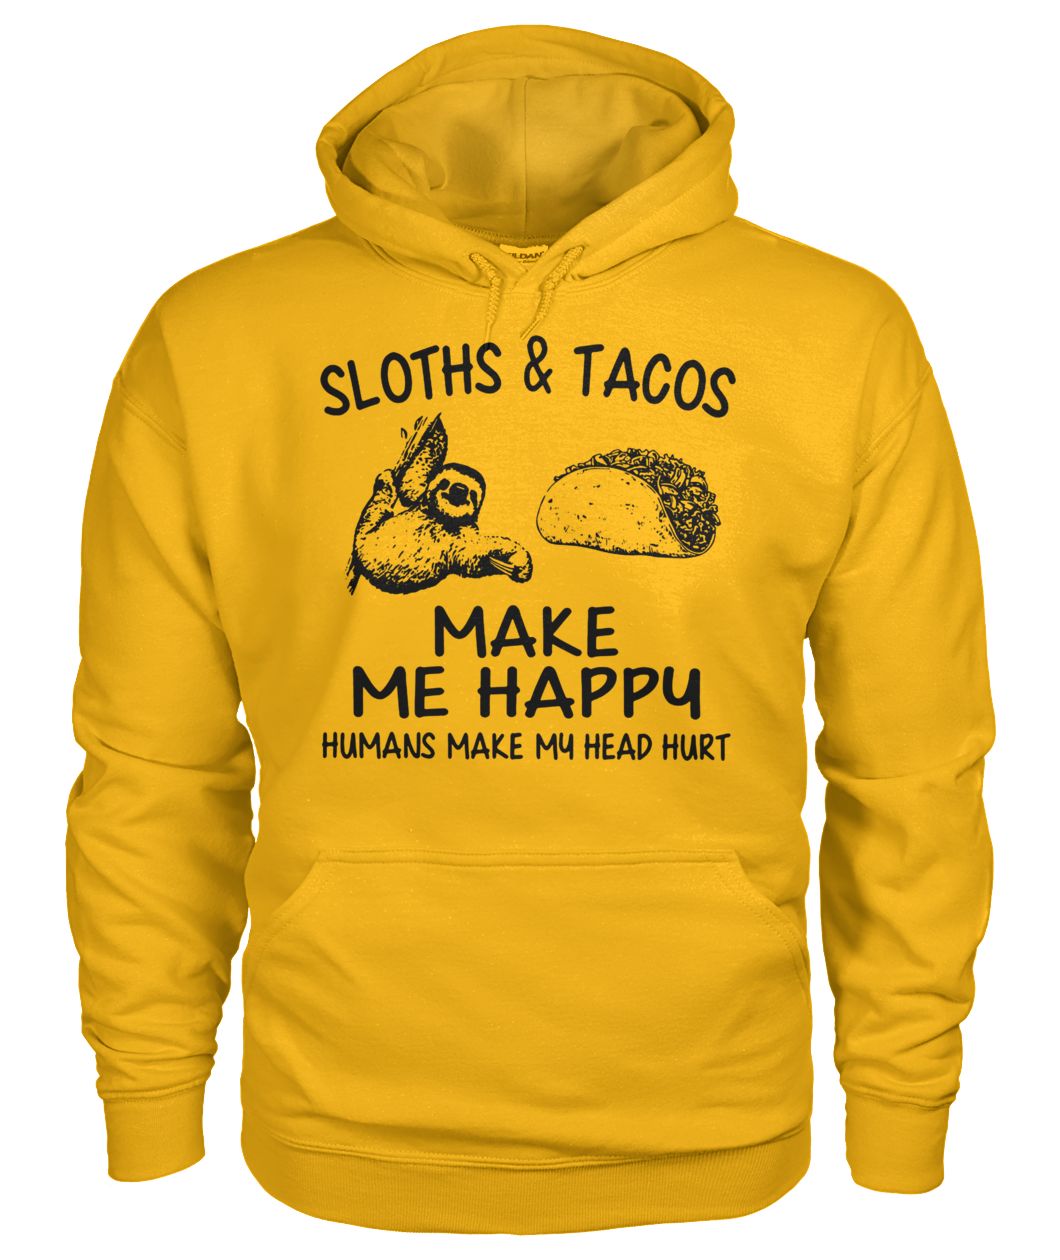 Sloths and tacos make me happy humans make my head hurt hoodie